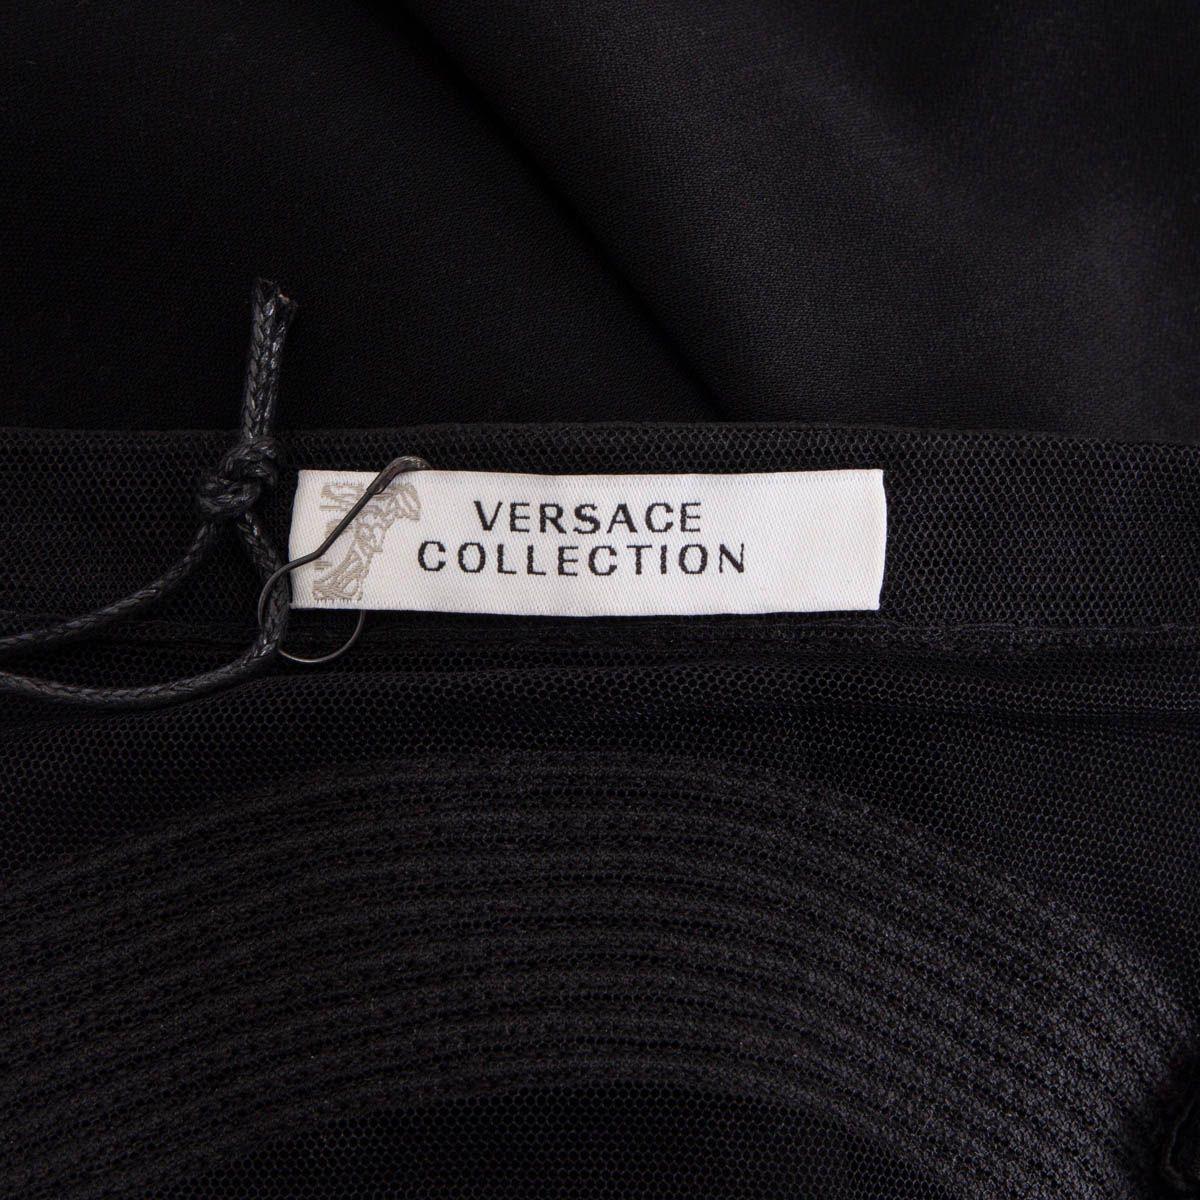 VERSACE COLLECTION black cotton CUT OUT EVENING GOWN Maxi Dress 44 L 1